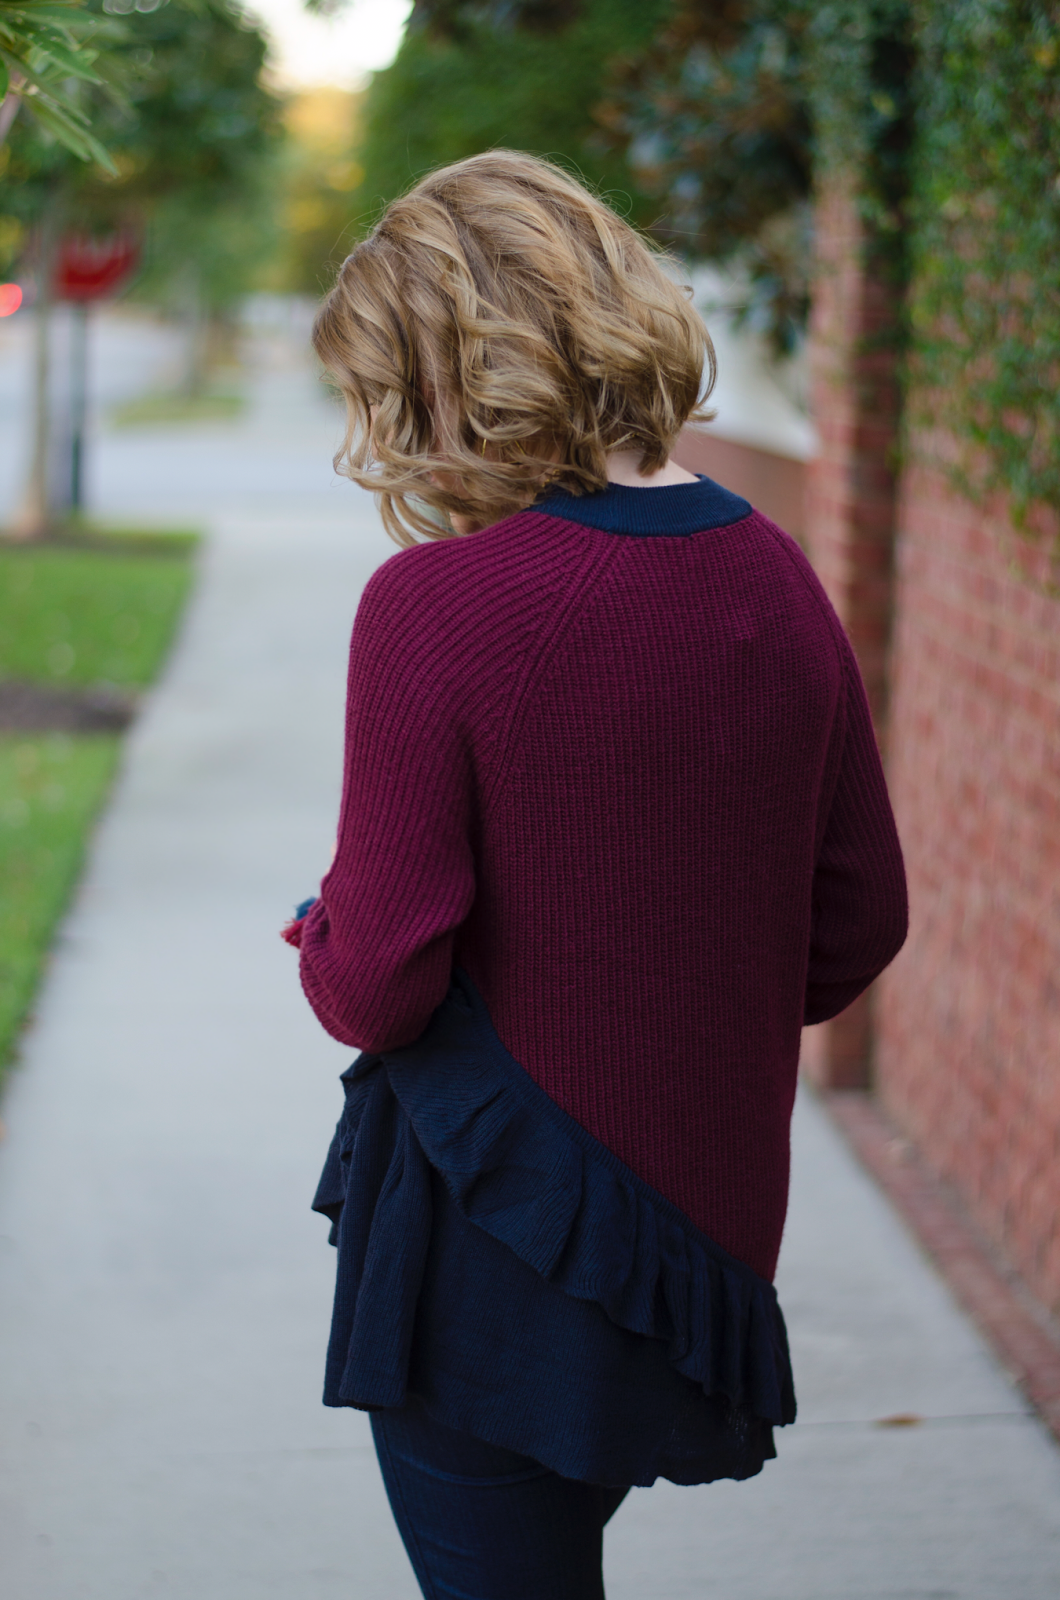 Ruffle Sweater - Something Delightful Blog